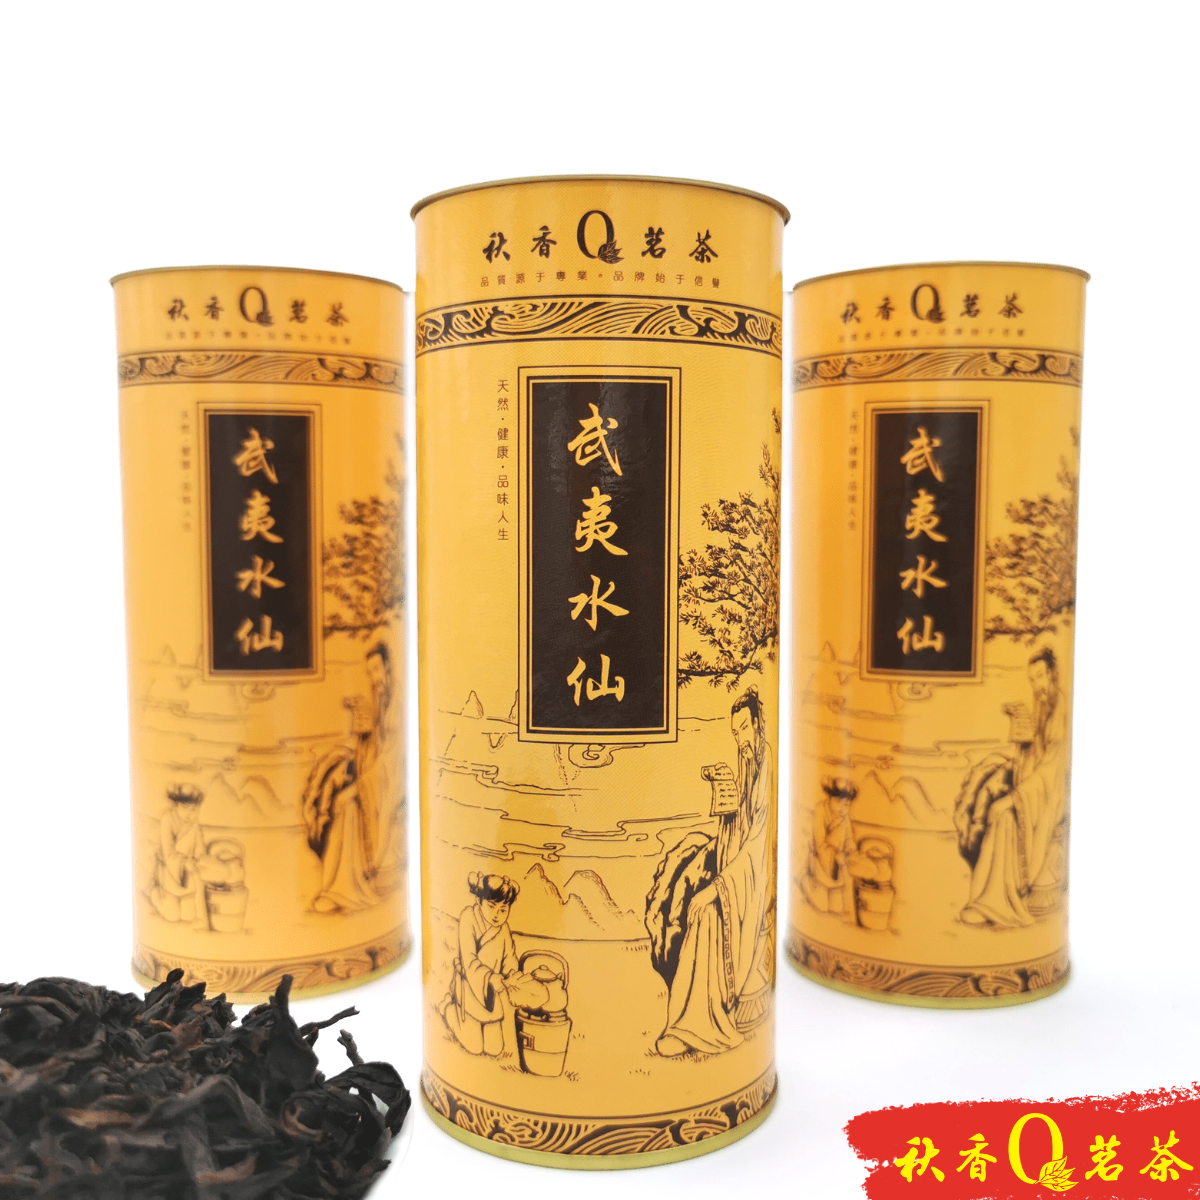 武夷水仙 Wu Yi Shui Xian tea【100g】|【武夷岩茶 WuYi Rock tea】